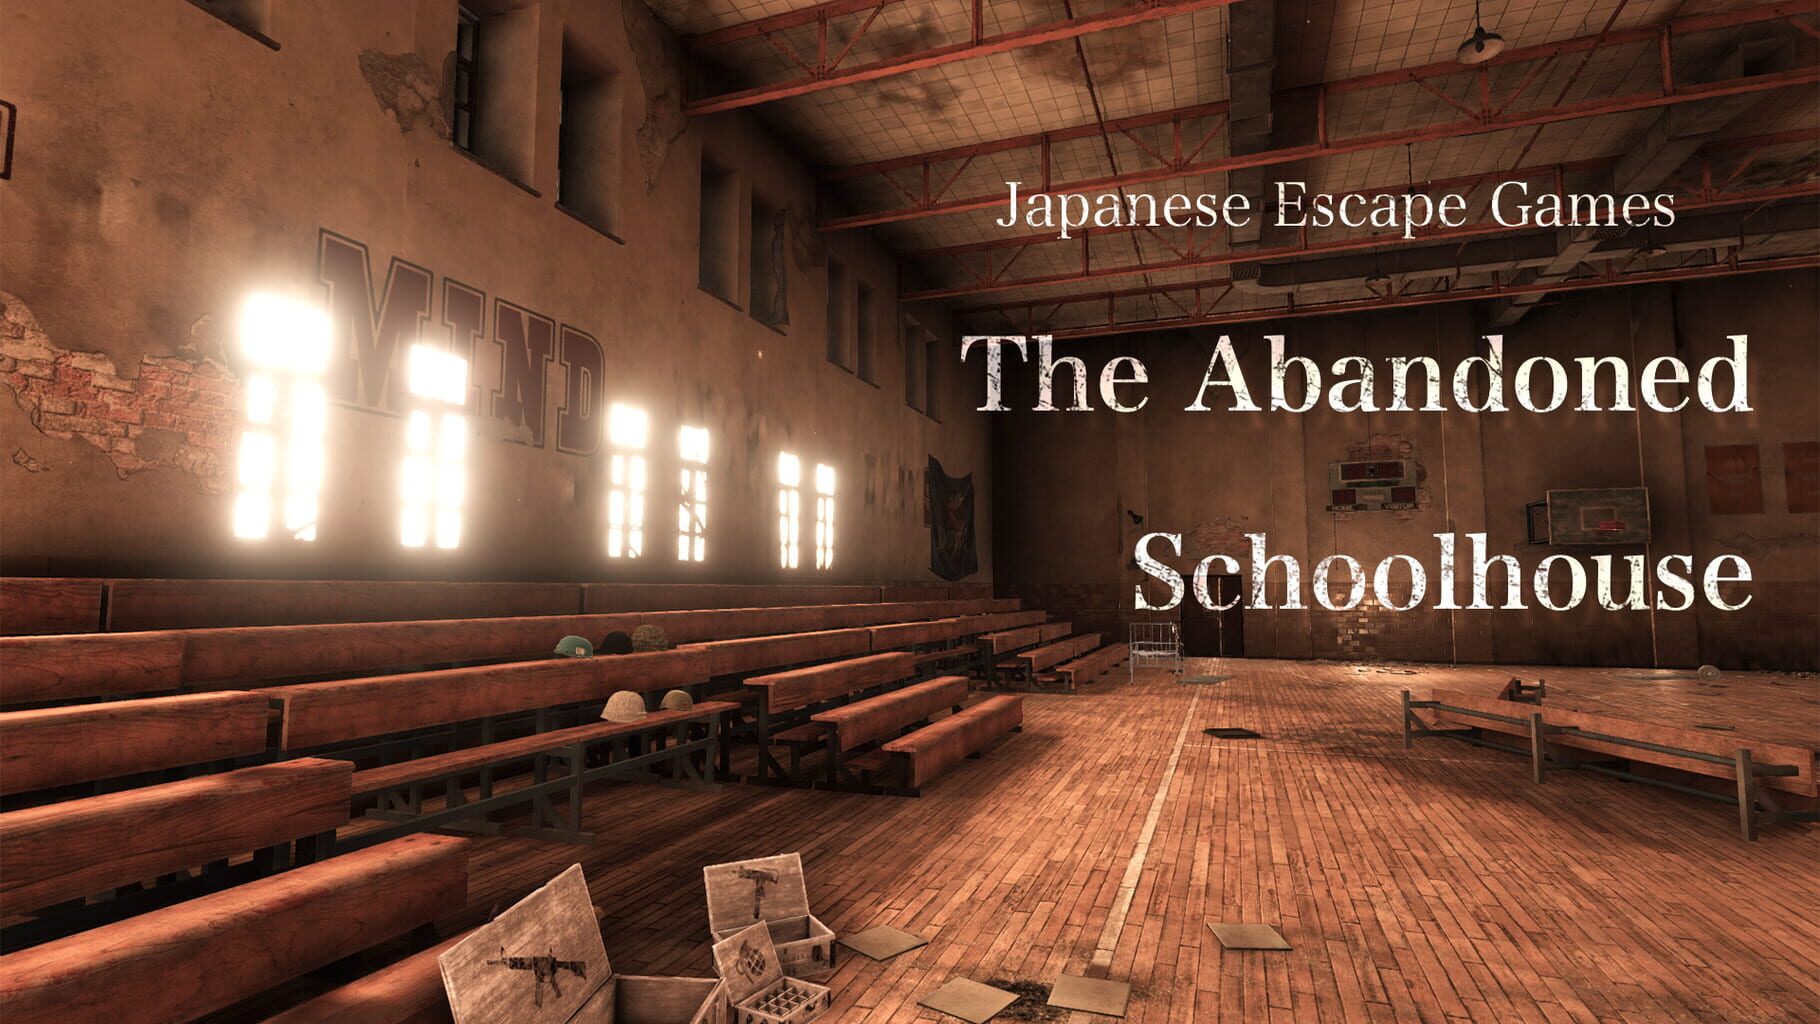 Japanese Escape Games: The Abandoned Schoolhouse artwork